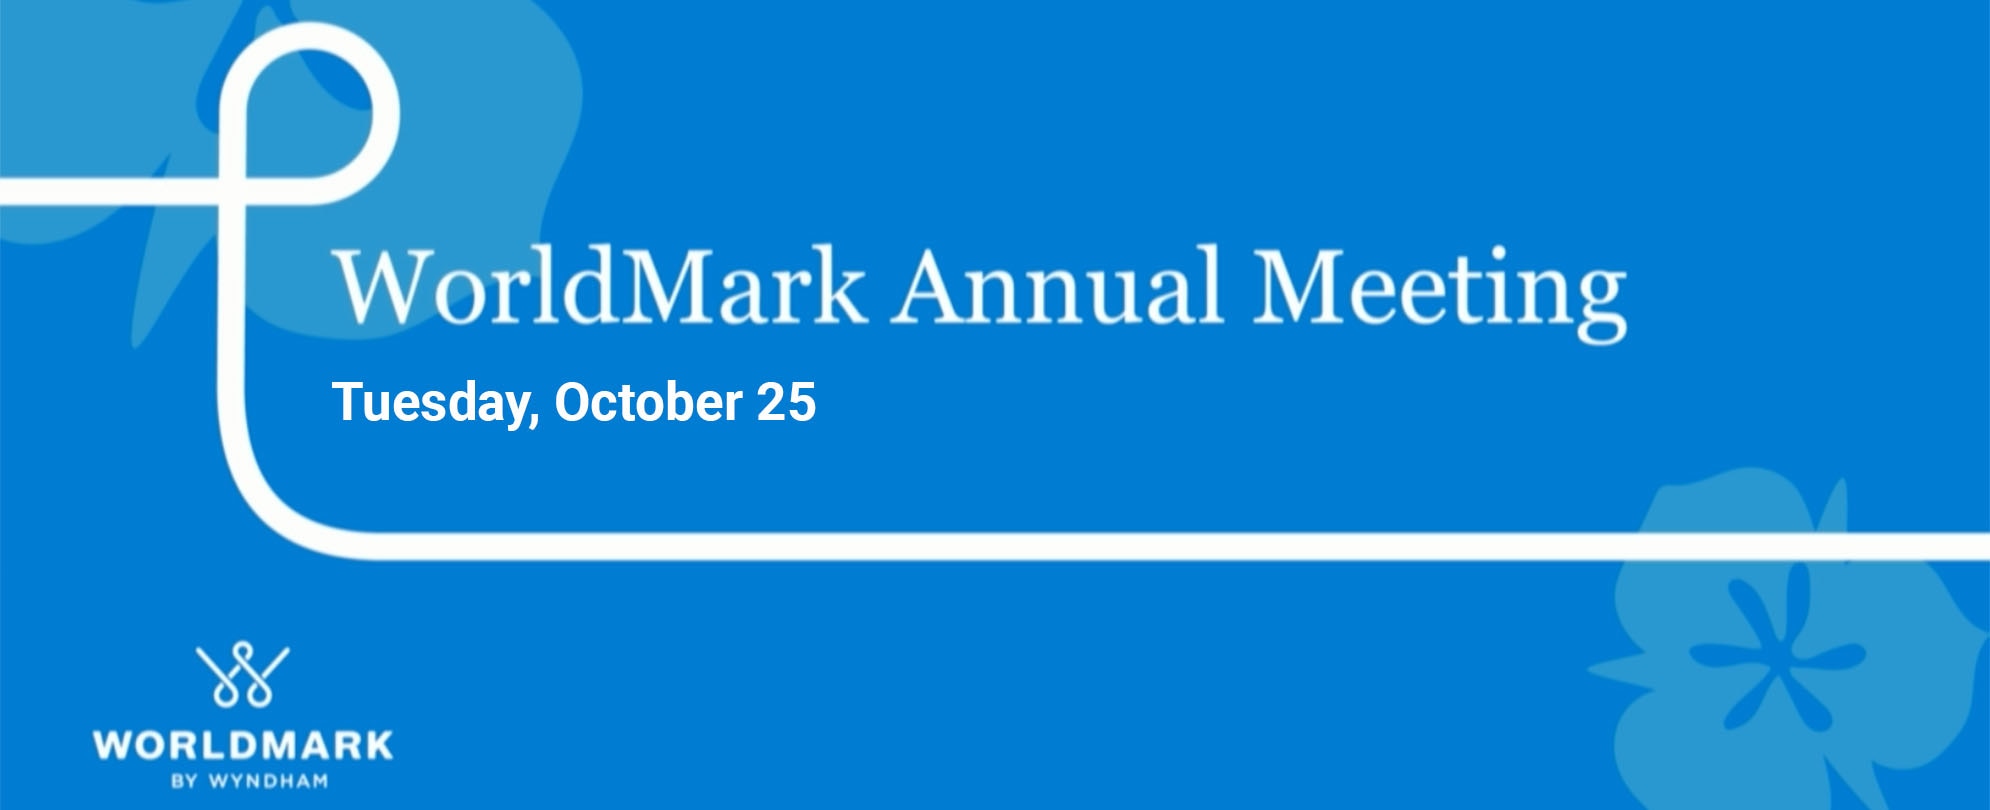 WorldMark Annual Meeting. Tuesday, October 25.